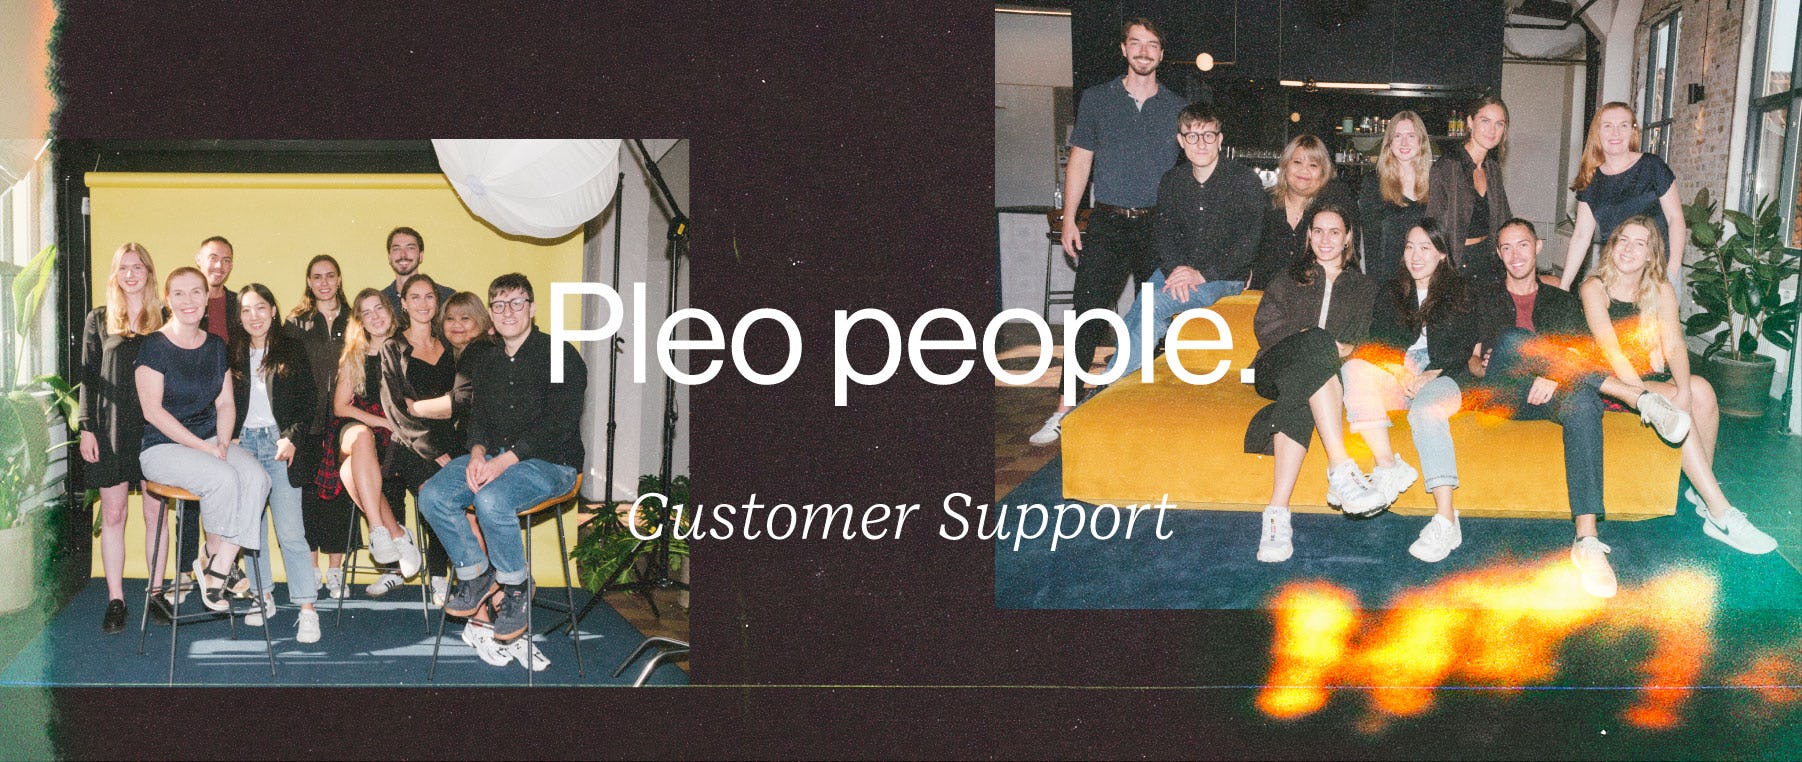 Pleo's Customer Support team. 